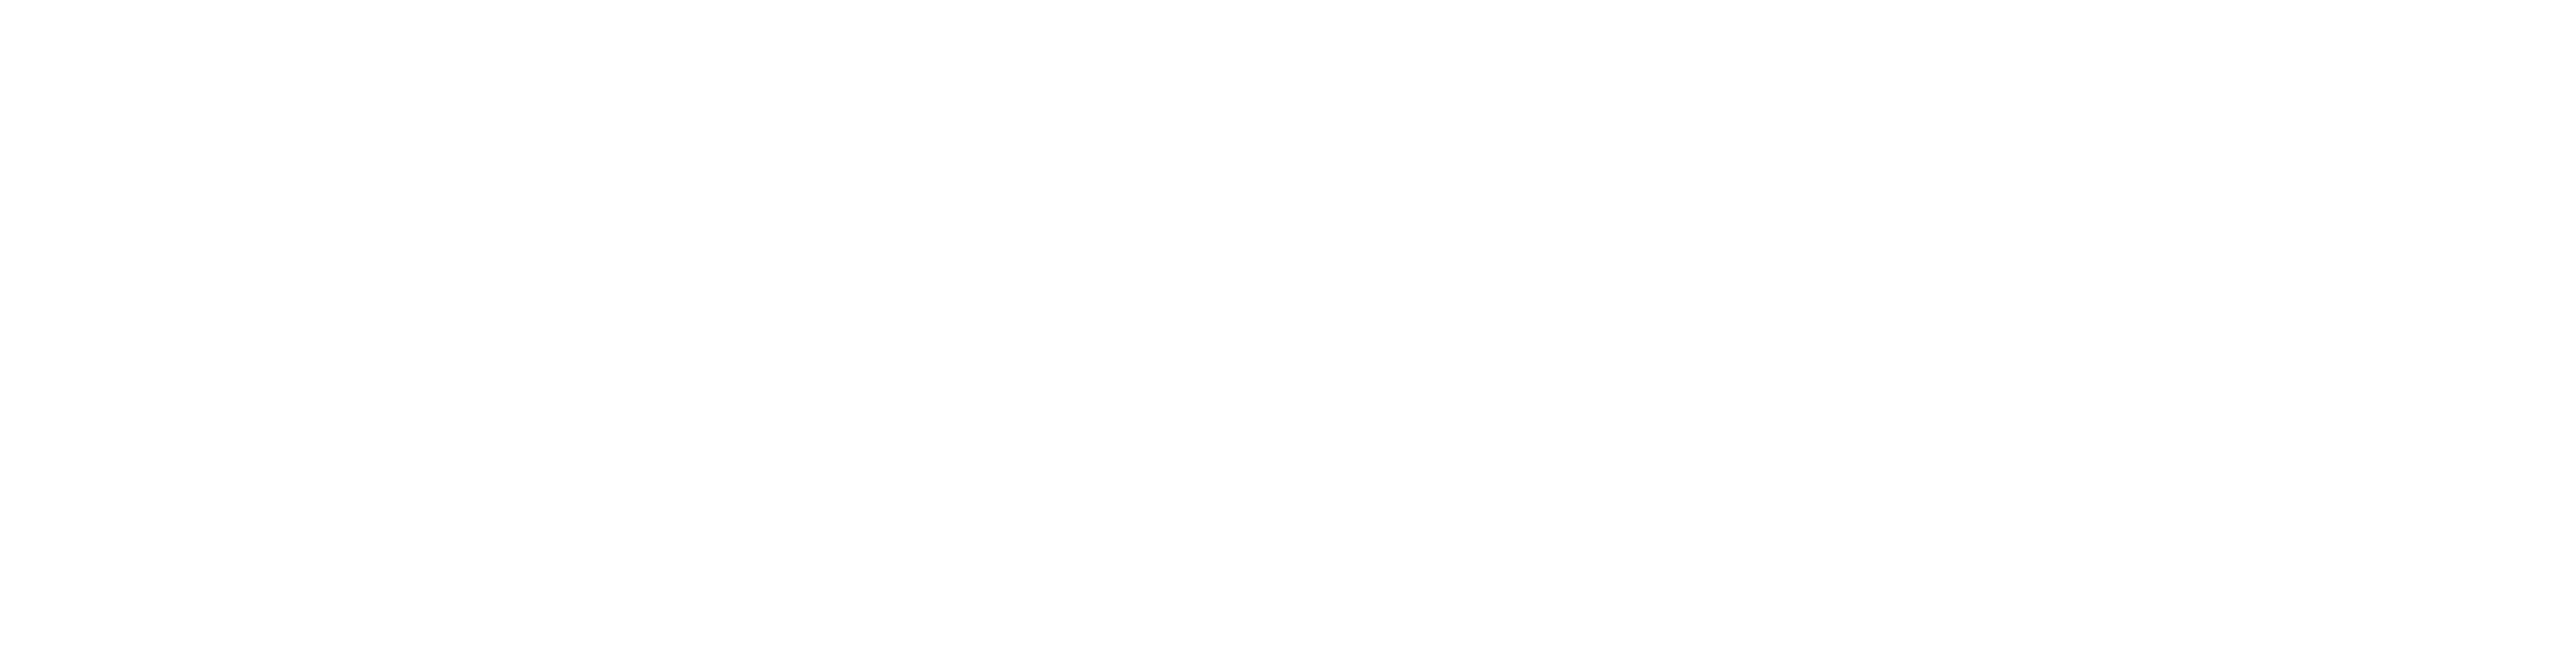 Angelo Gordon